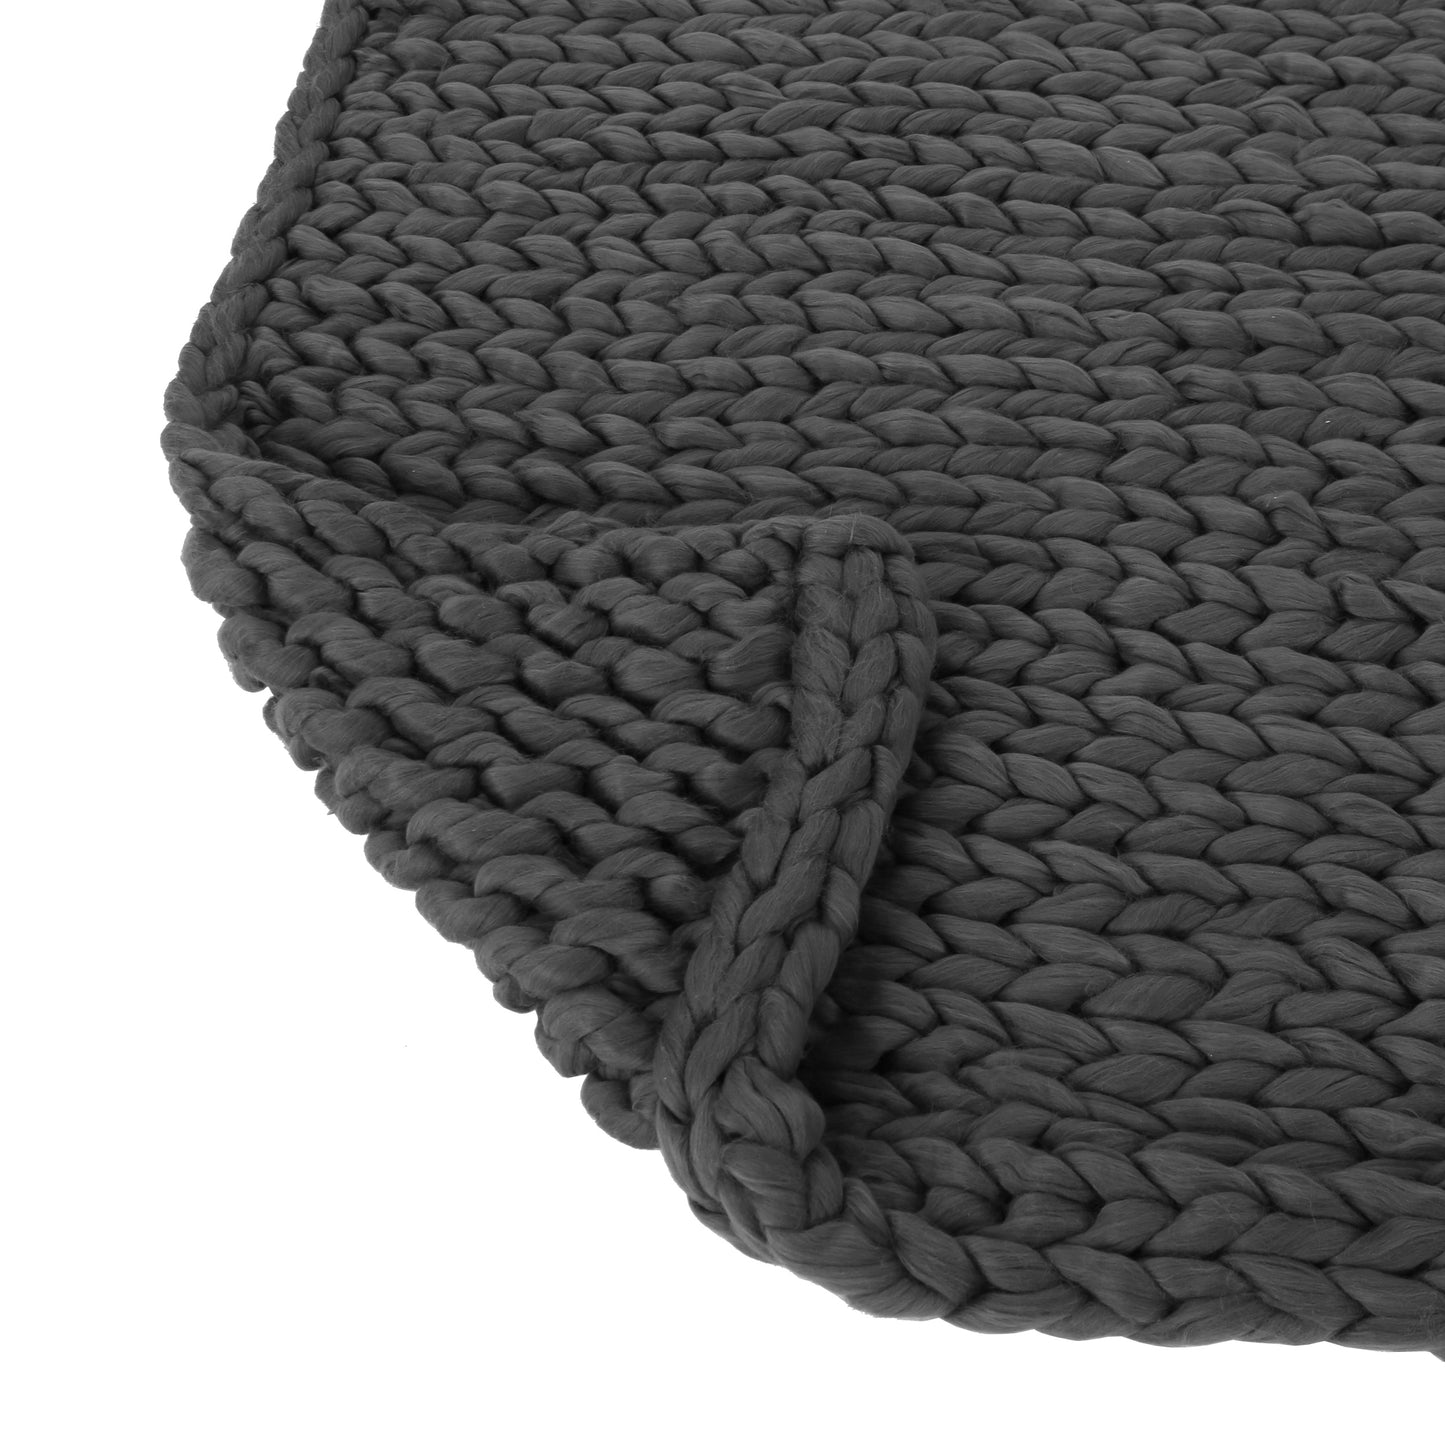 Jacqueline Modern Knit Stitch Fabric Rectangle Throw Blanket